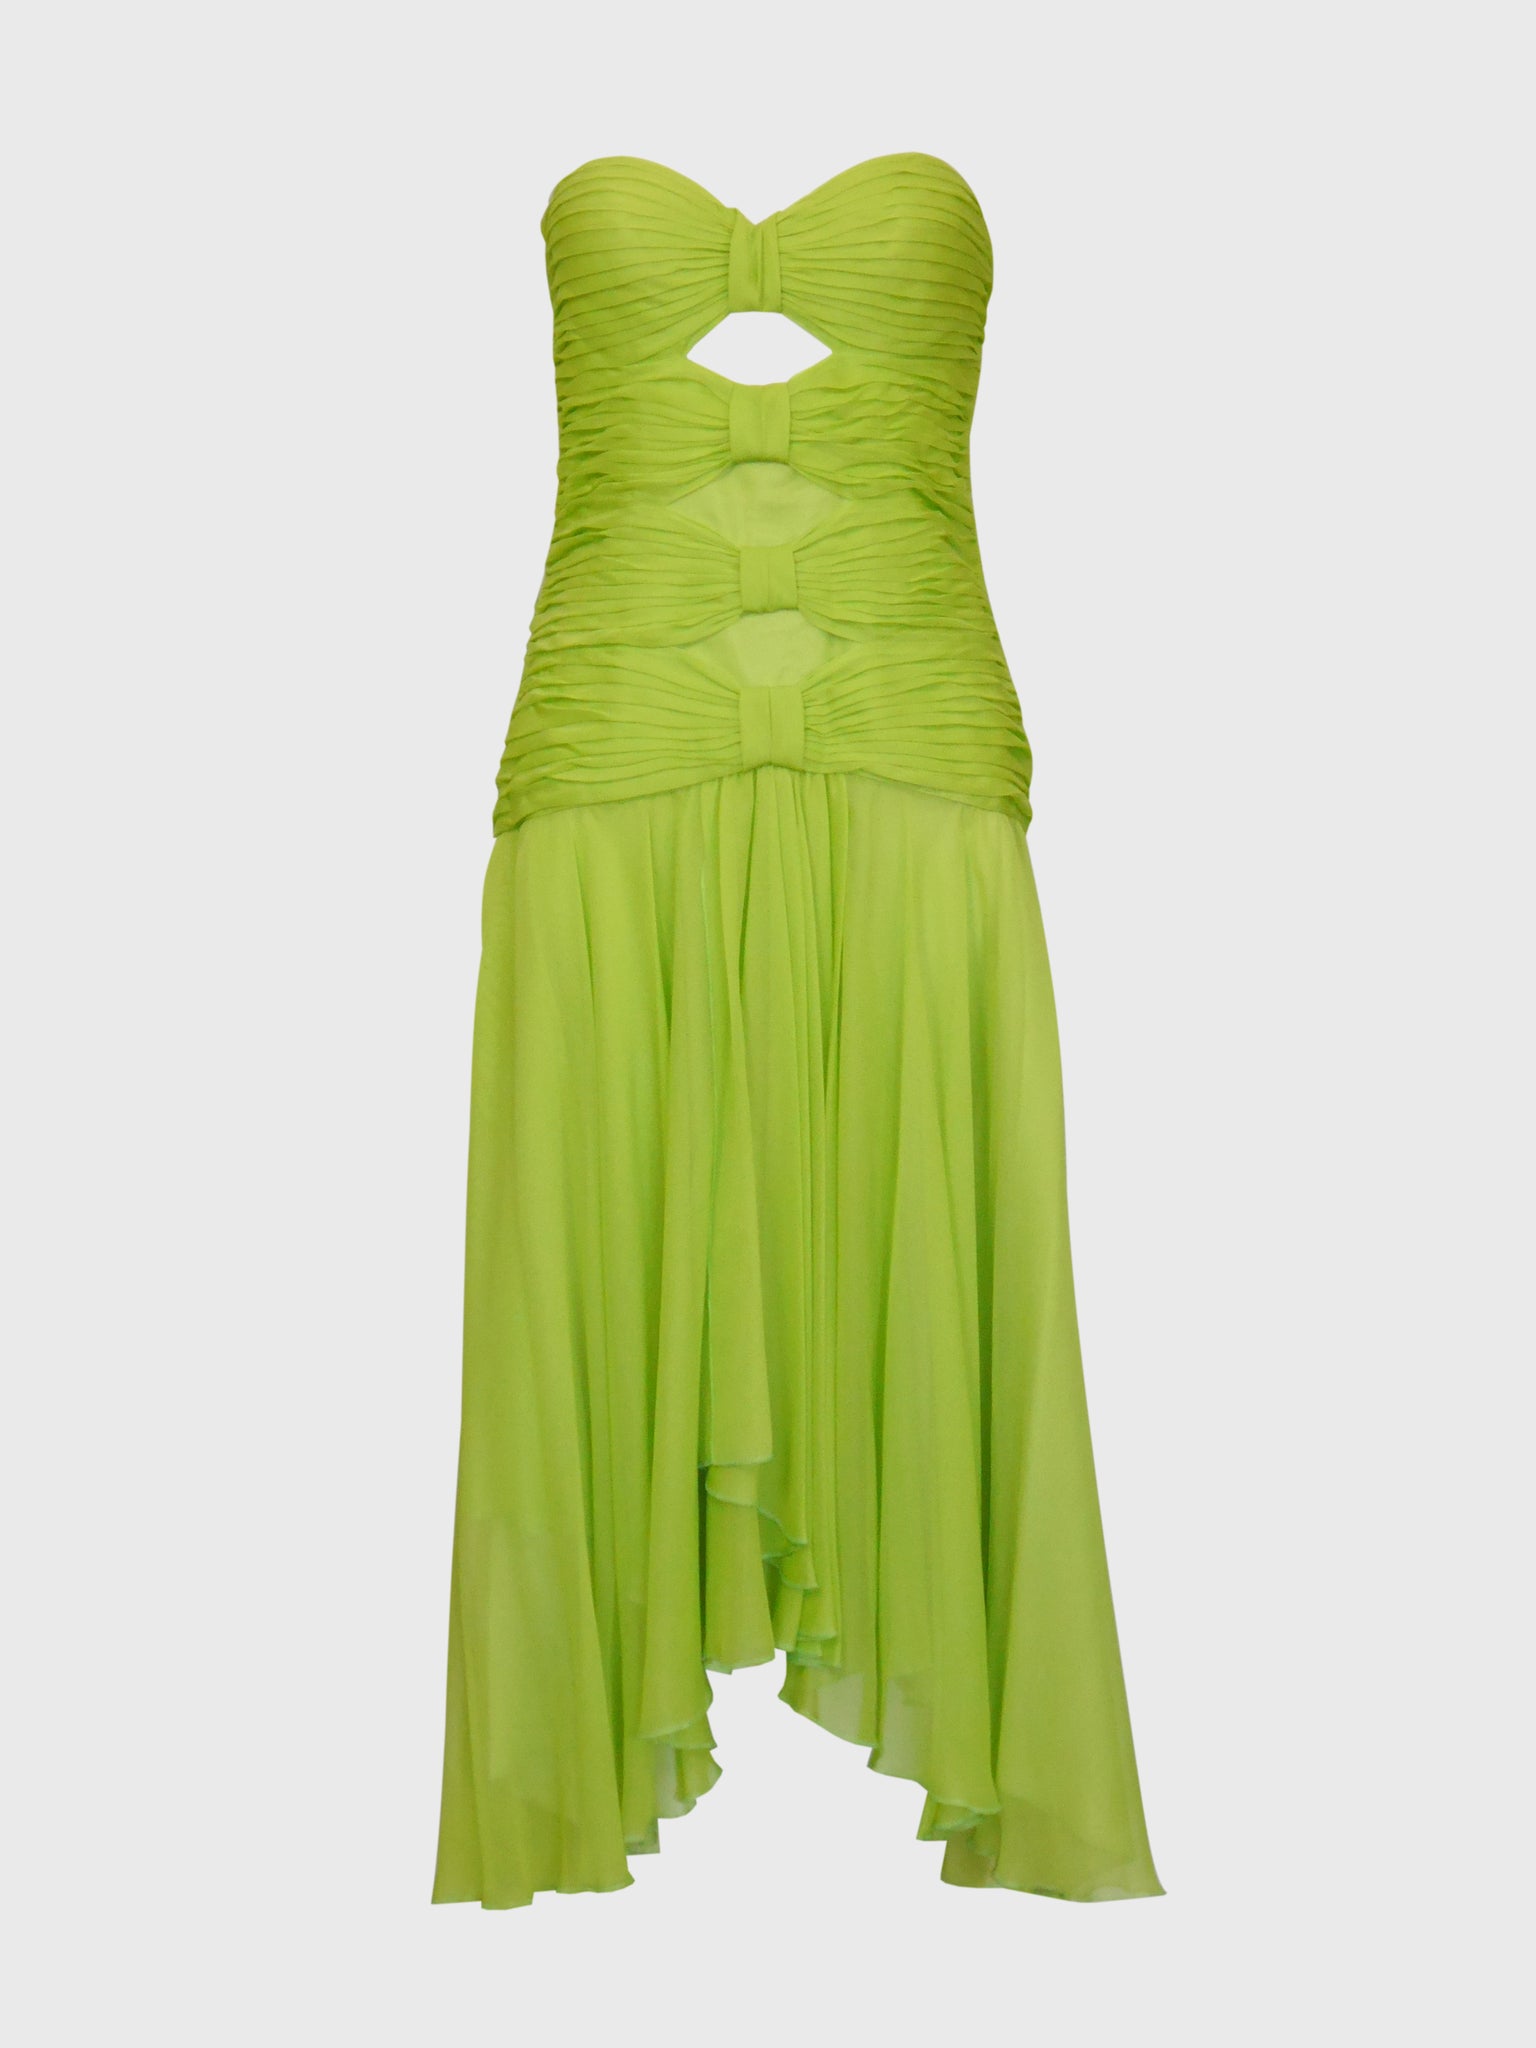 LOUIS FÉRAUD 1980s Vintage Lime Green Silk Bustier Evening Dress Size M